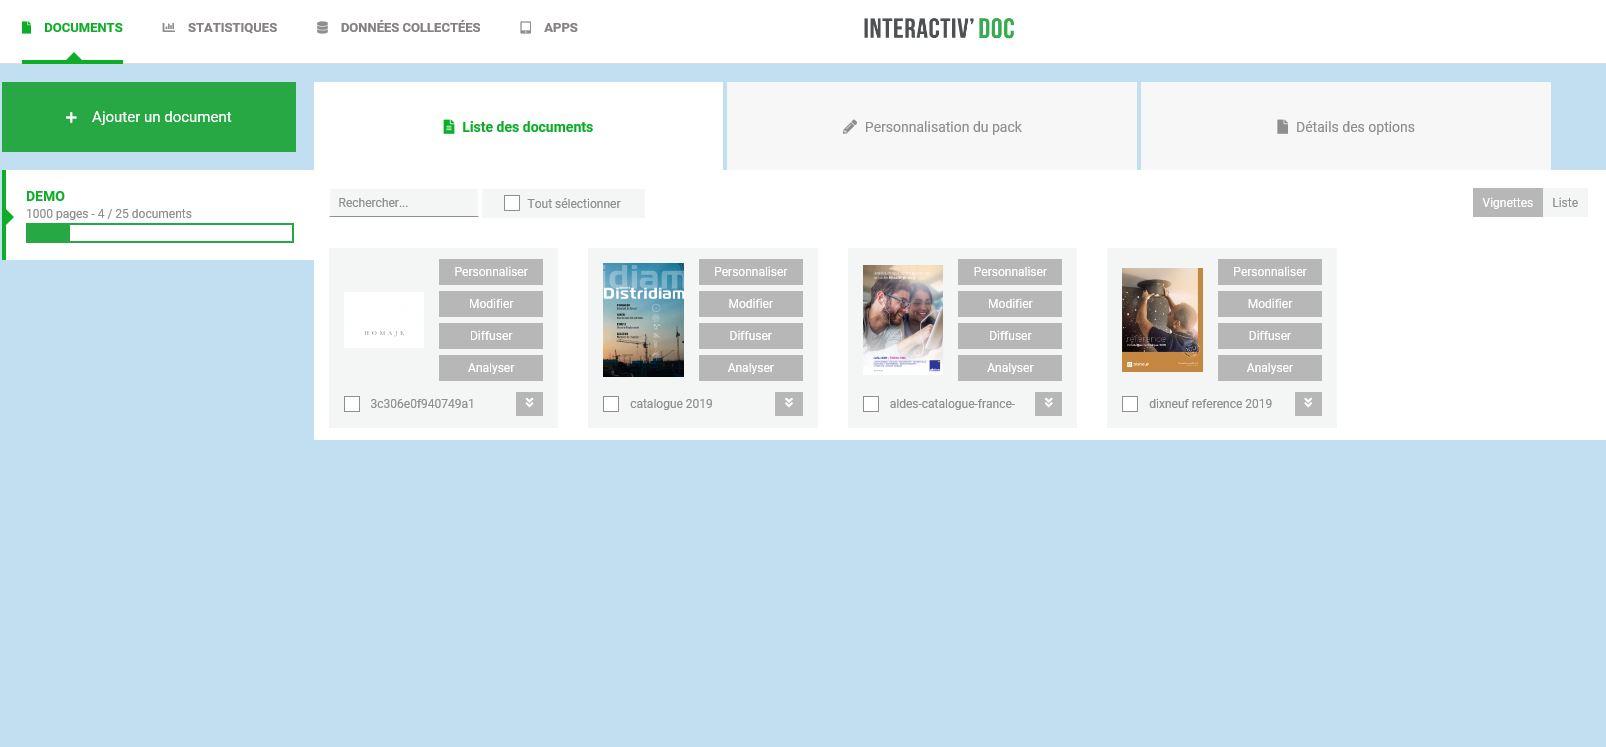 Interactiv' Doc - Screenshot 3